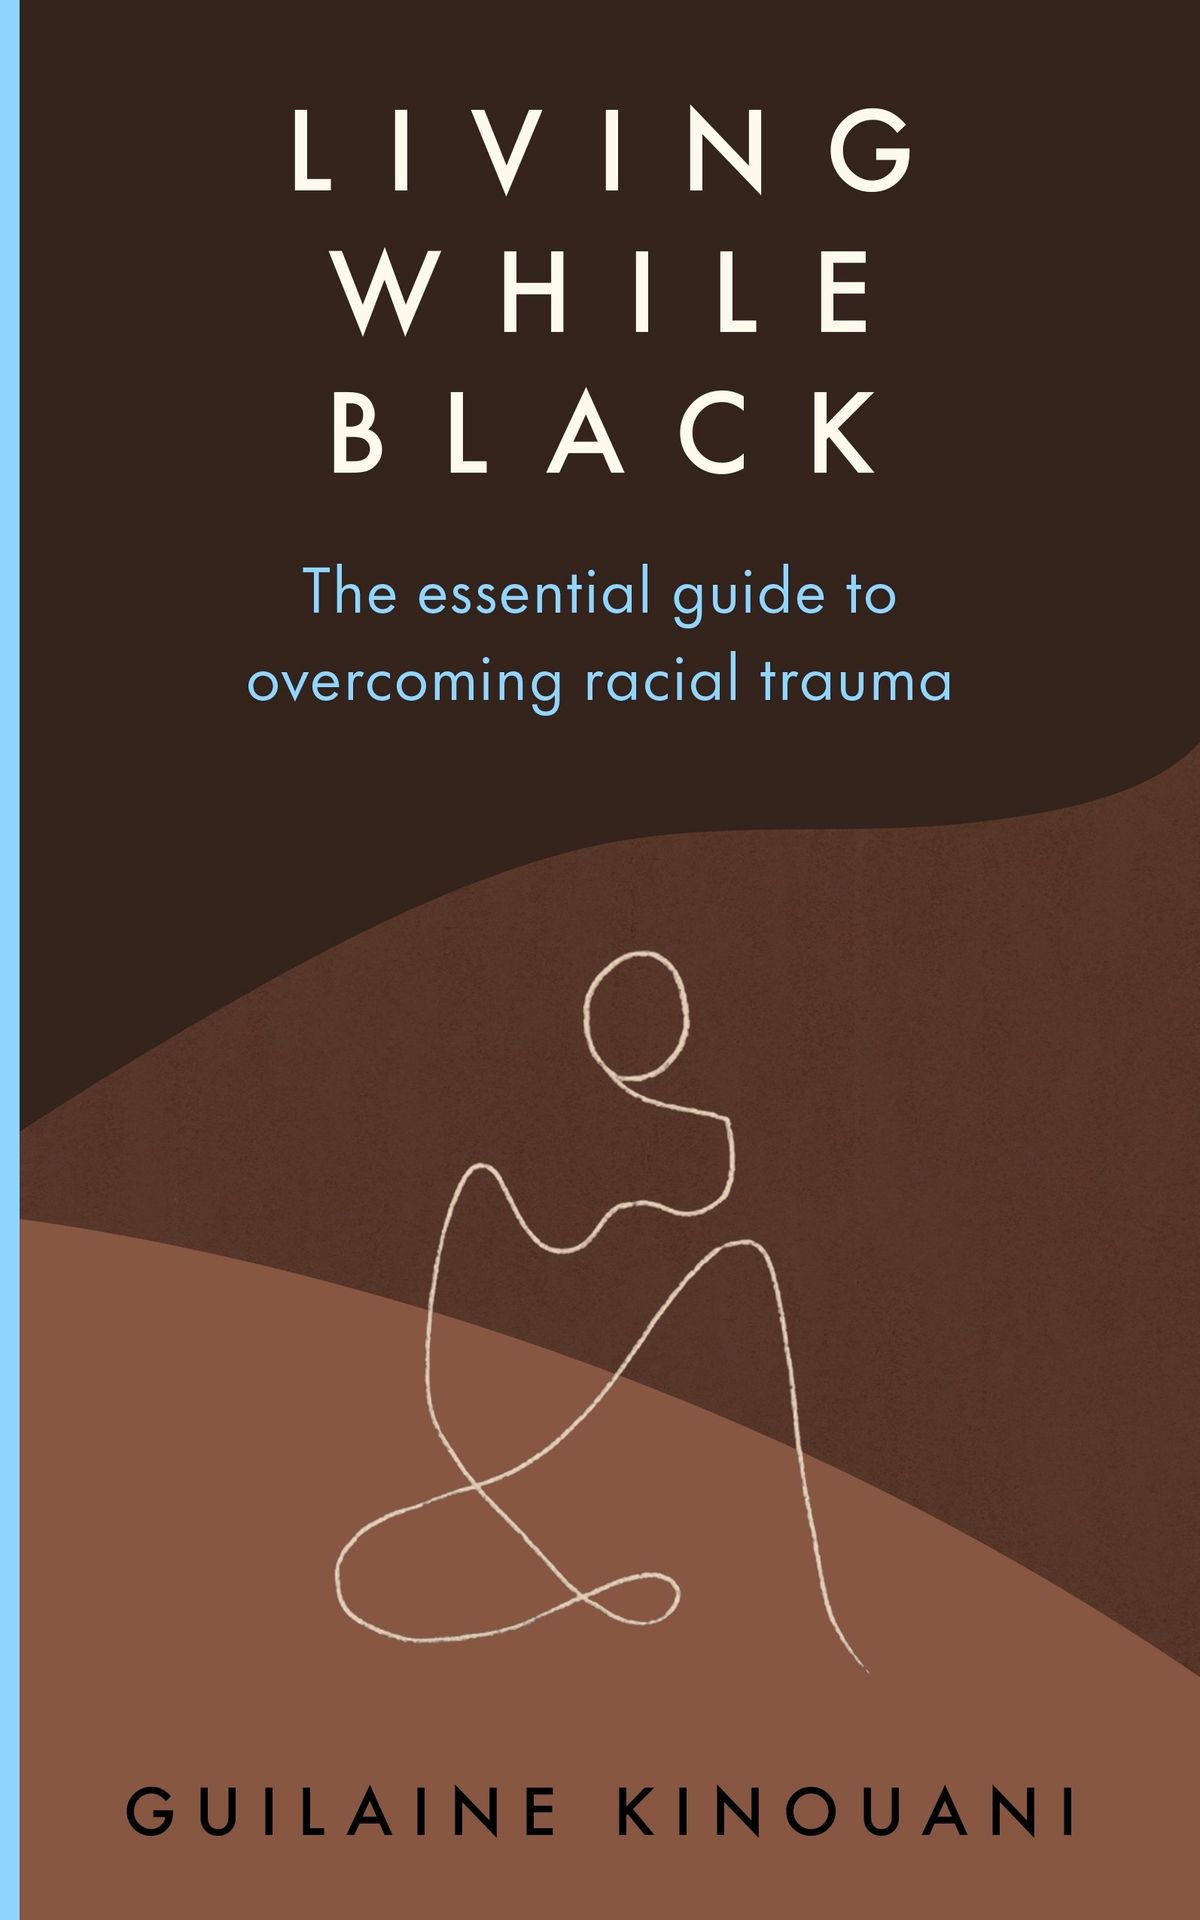 Living while black ofrece un análisis riguroso del trauma racial - EXTRACTO